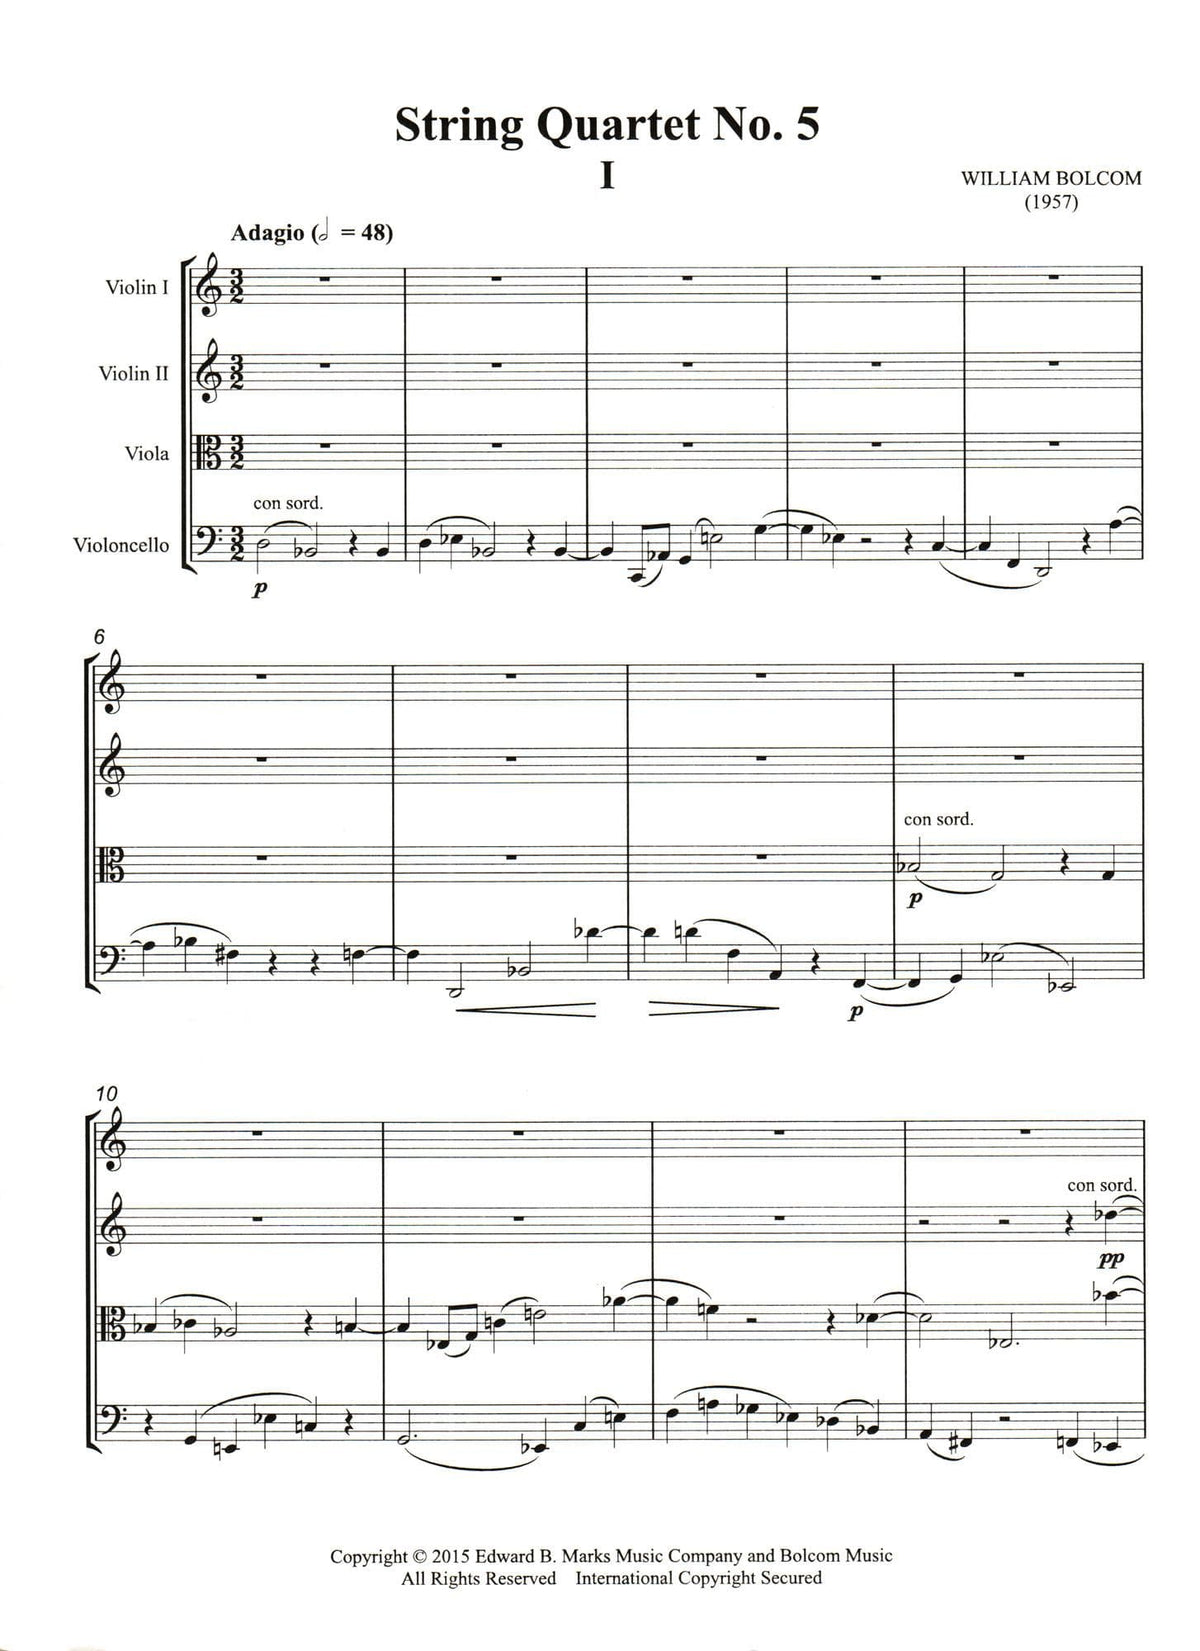 Bolcom, William - String Quartet No. 5 - Score and Parts - Edward B. Marks Music Company